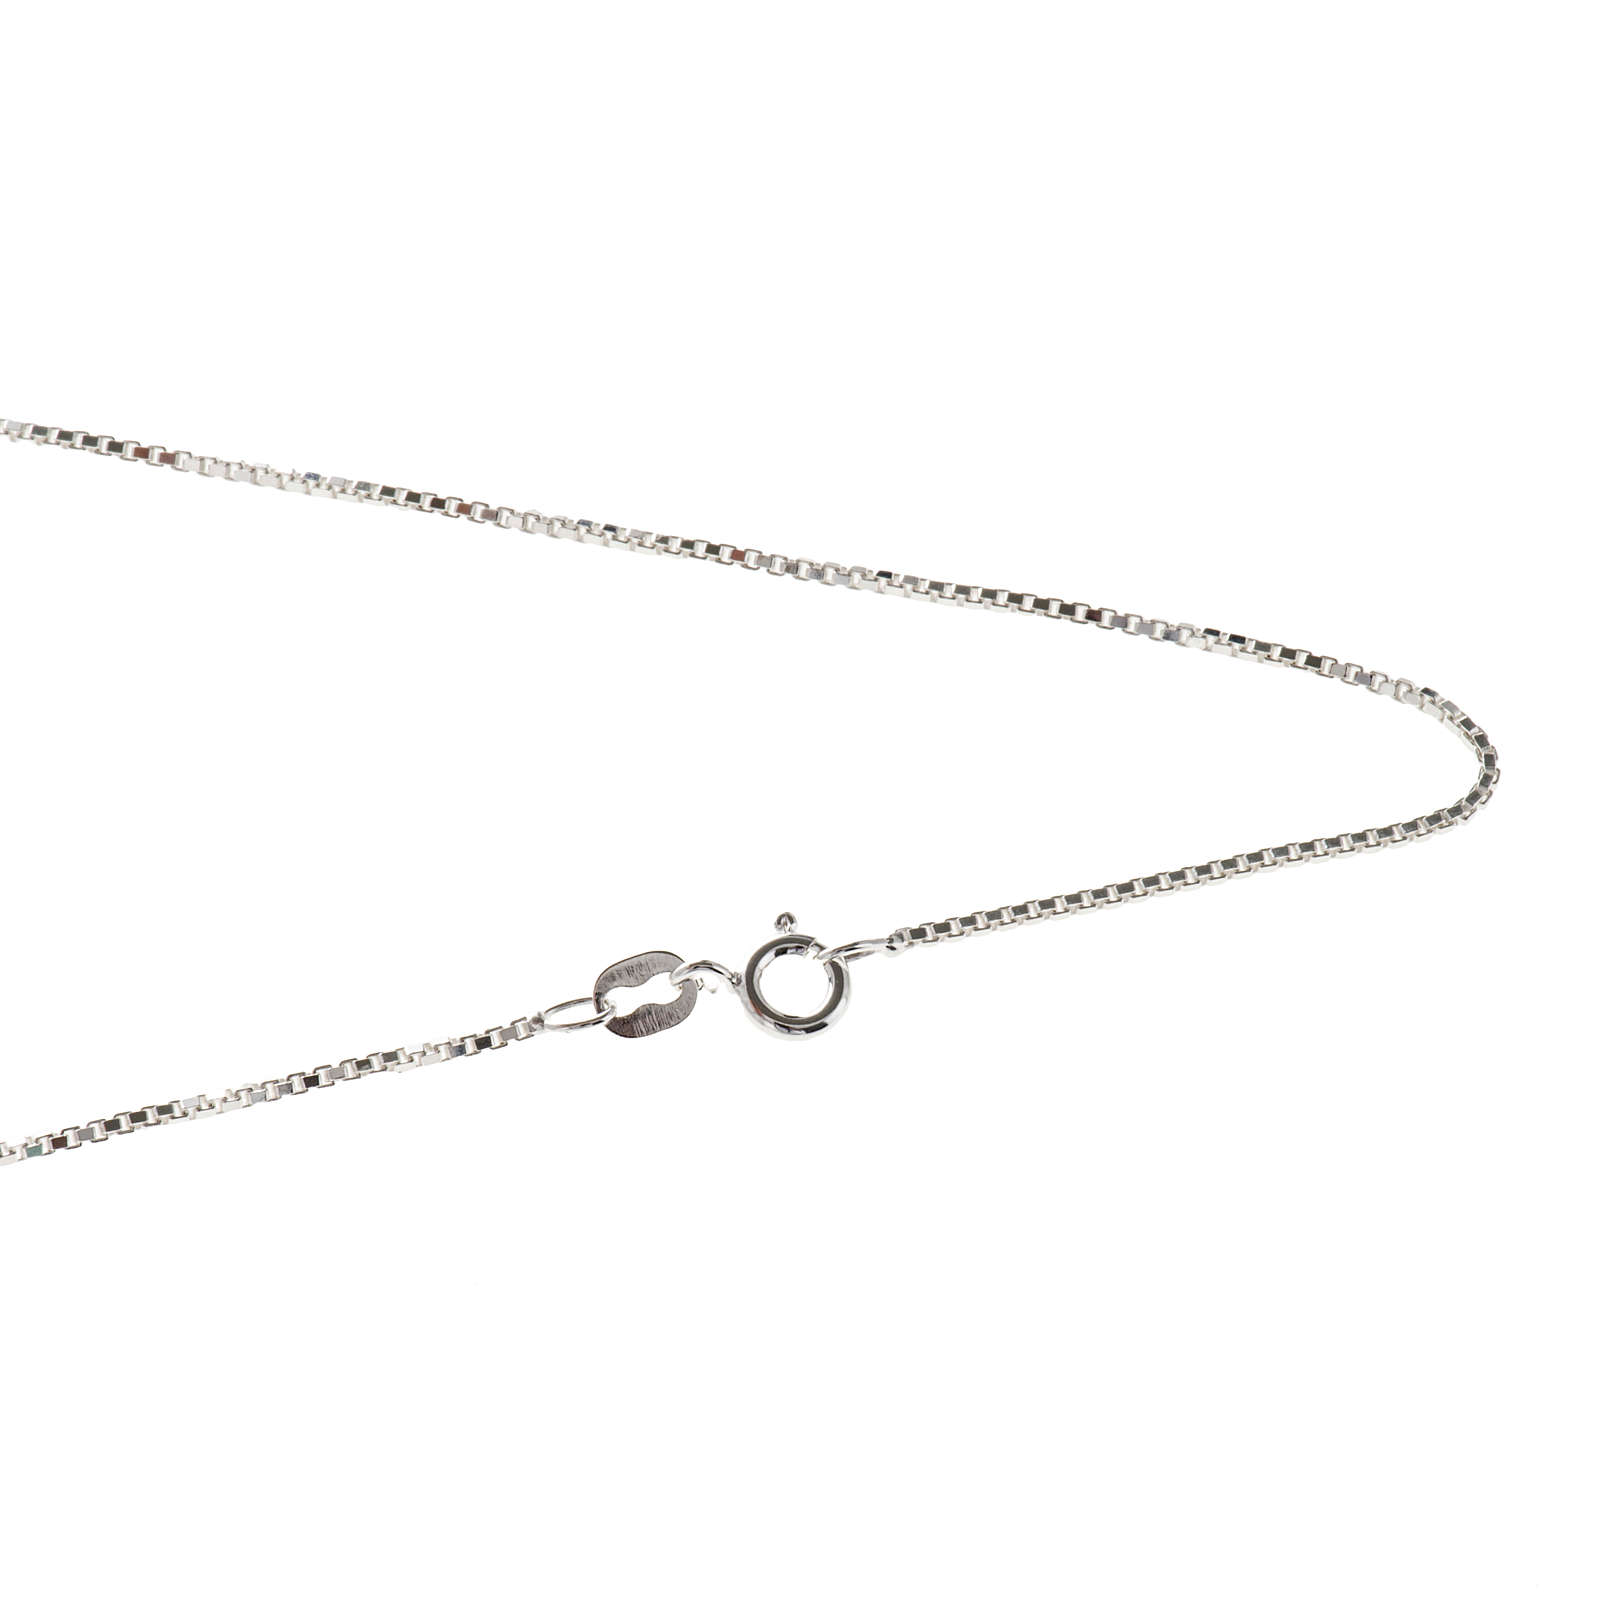 Venetian chain in sterling silver 50cm | online sales on HOLYART.co.uk